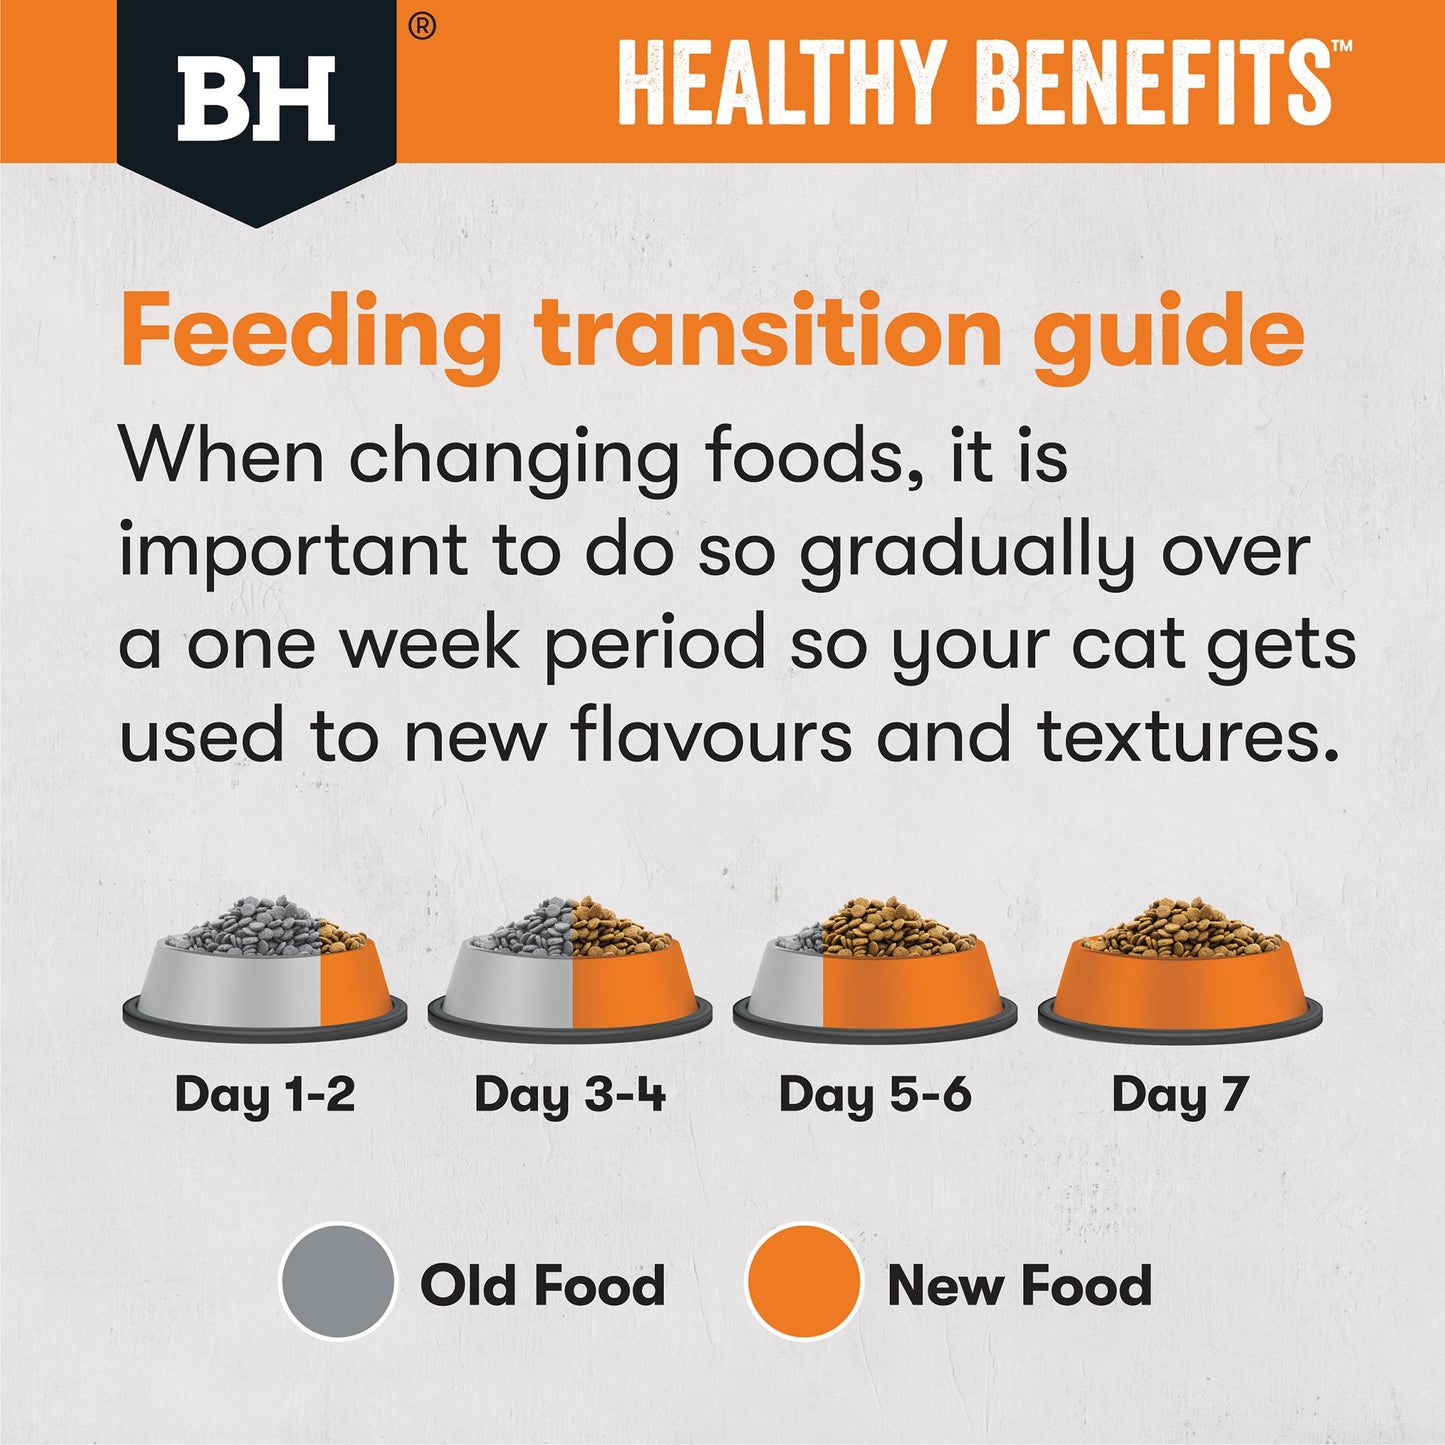 Black Hawk Healthy Benefits Weight Chicken Dry Cat Food